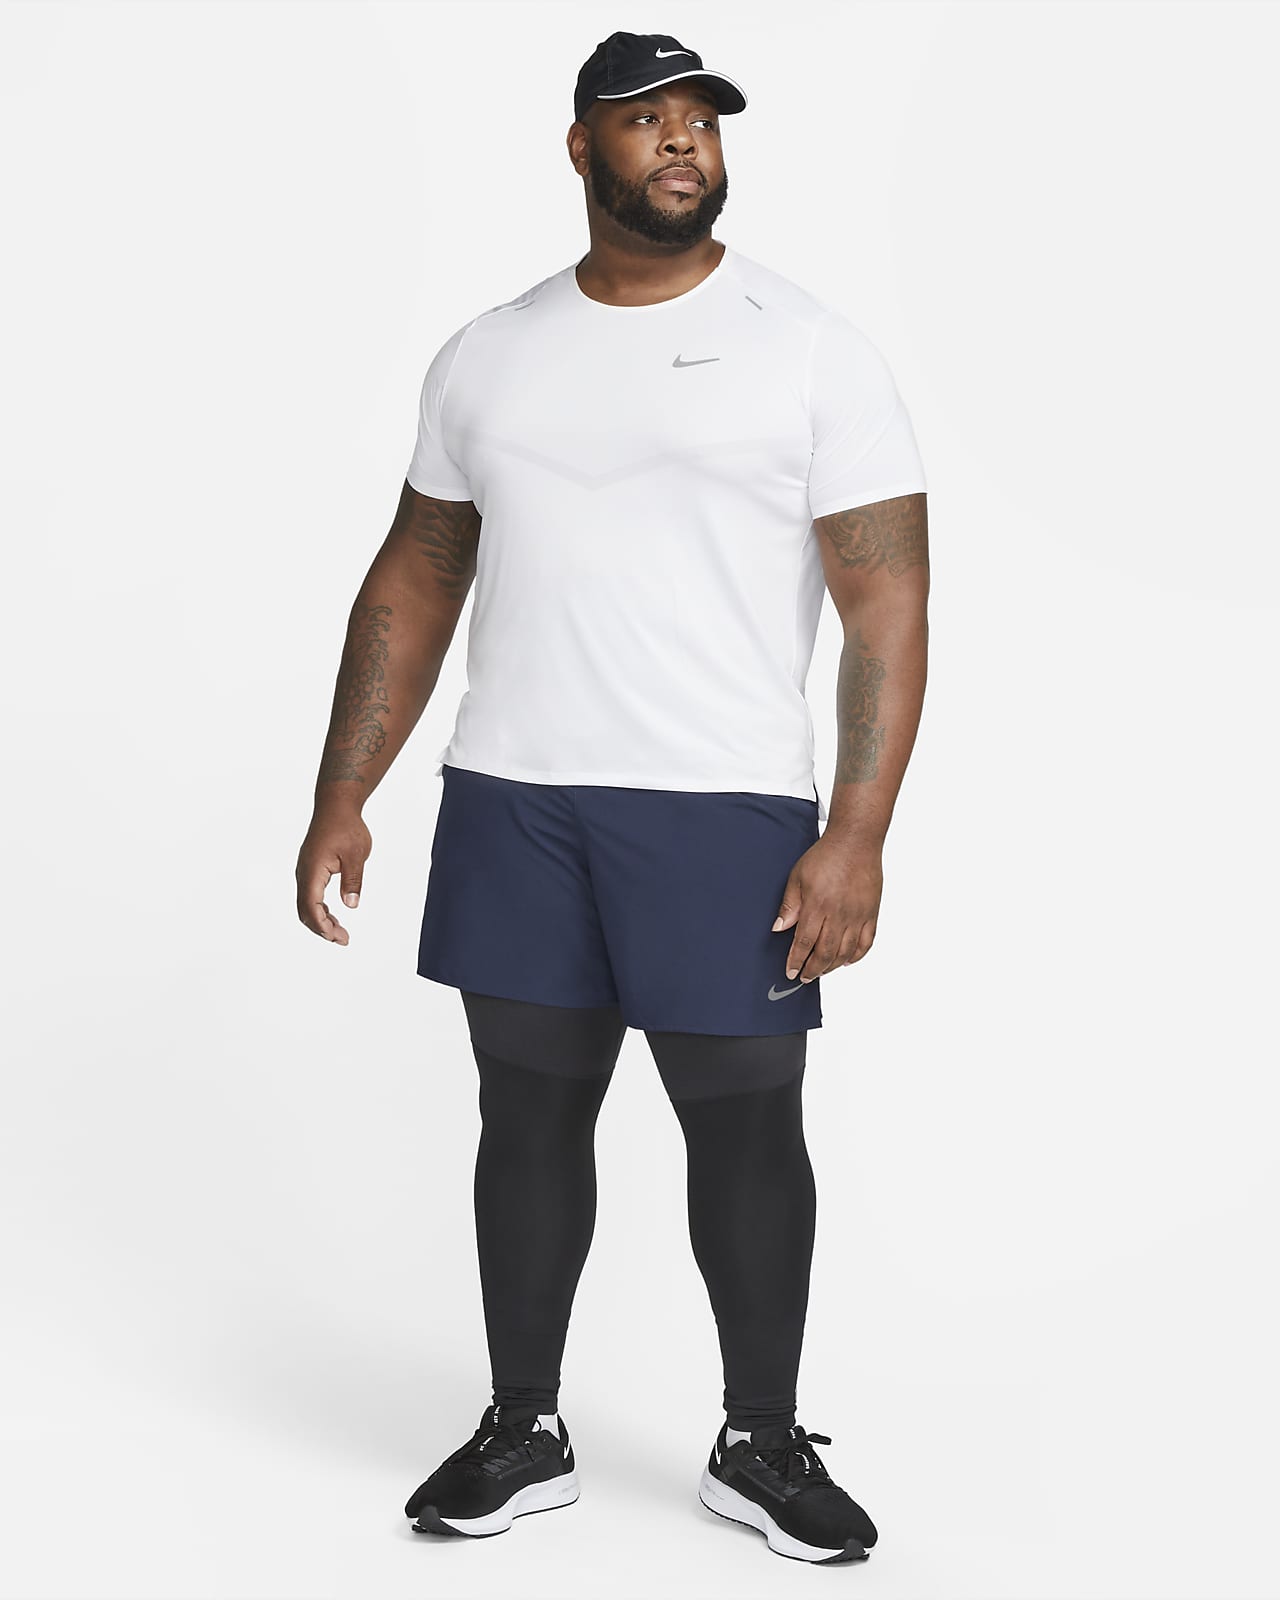 Men's Nike Phenom Elite Dri-FIT Running Tights